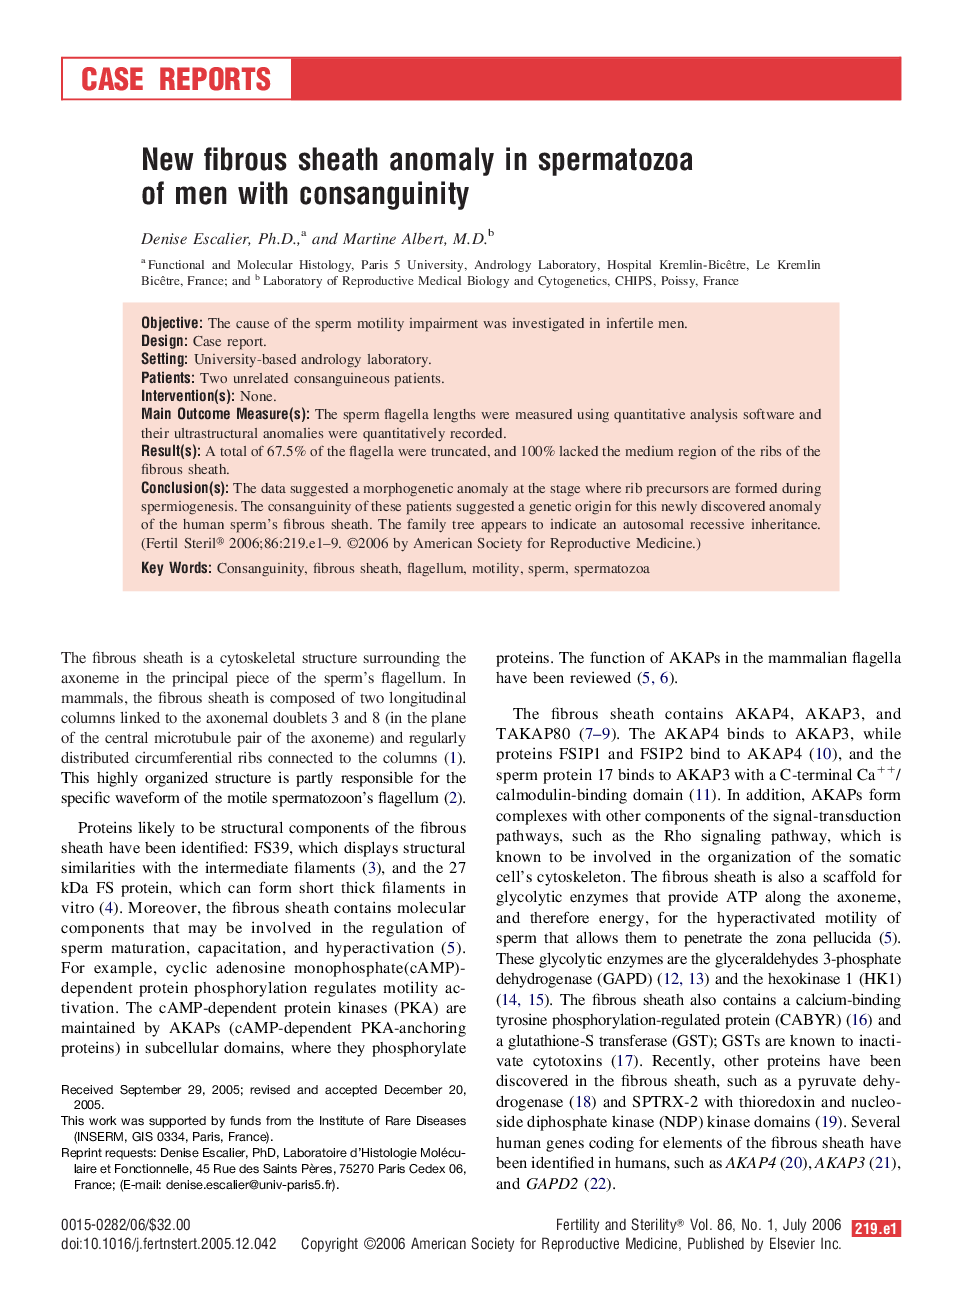 New fibrous sheath anomaly in spermatozoa of men with consanguinity